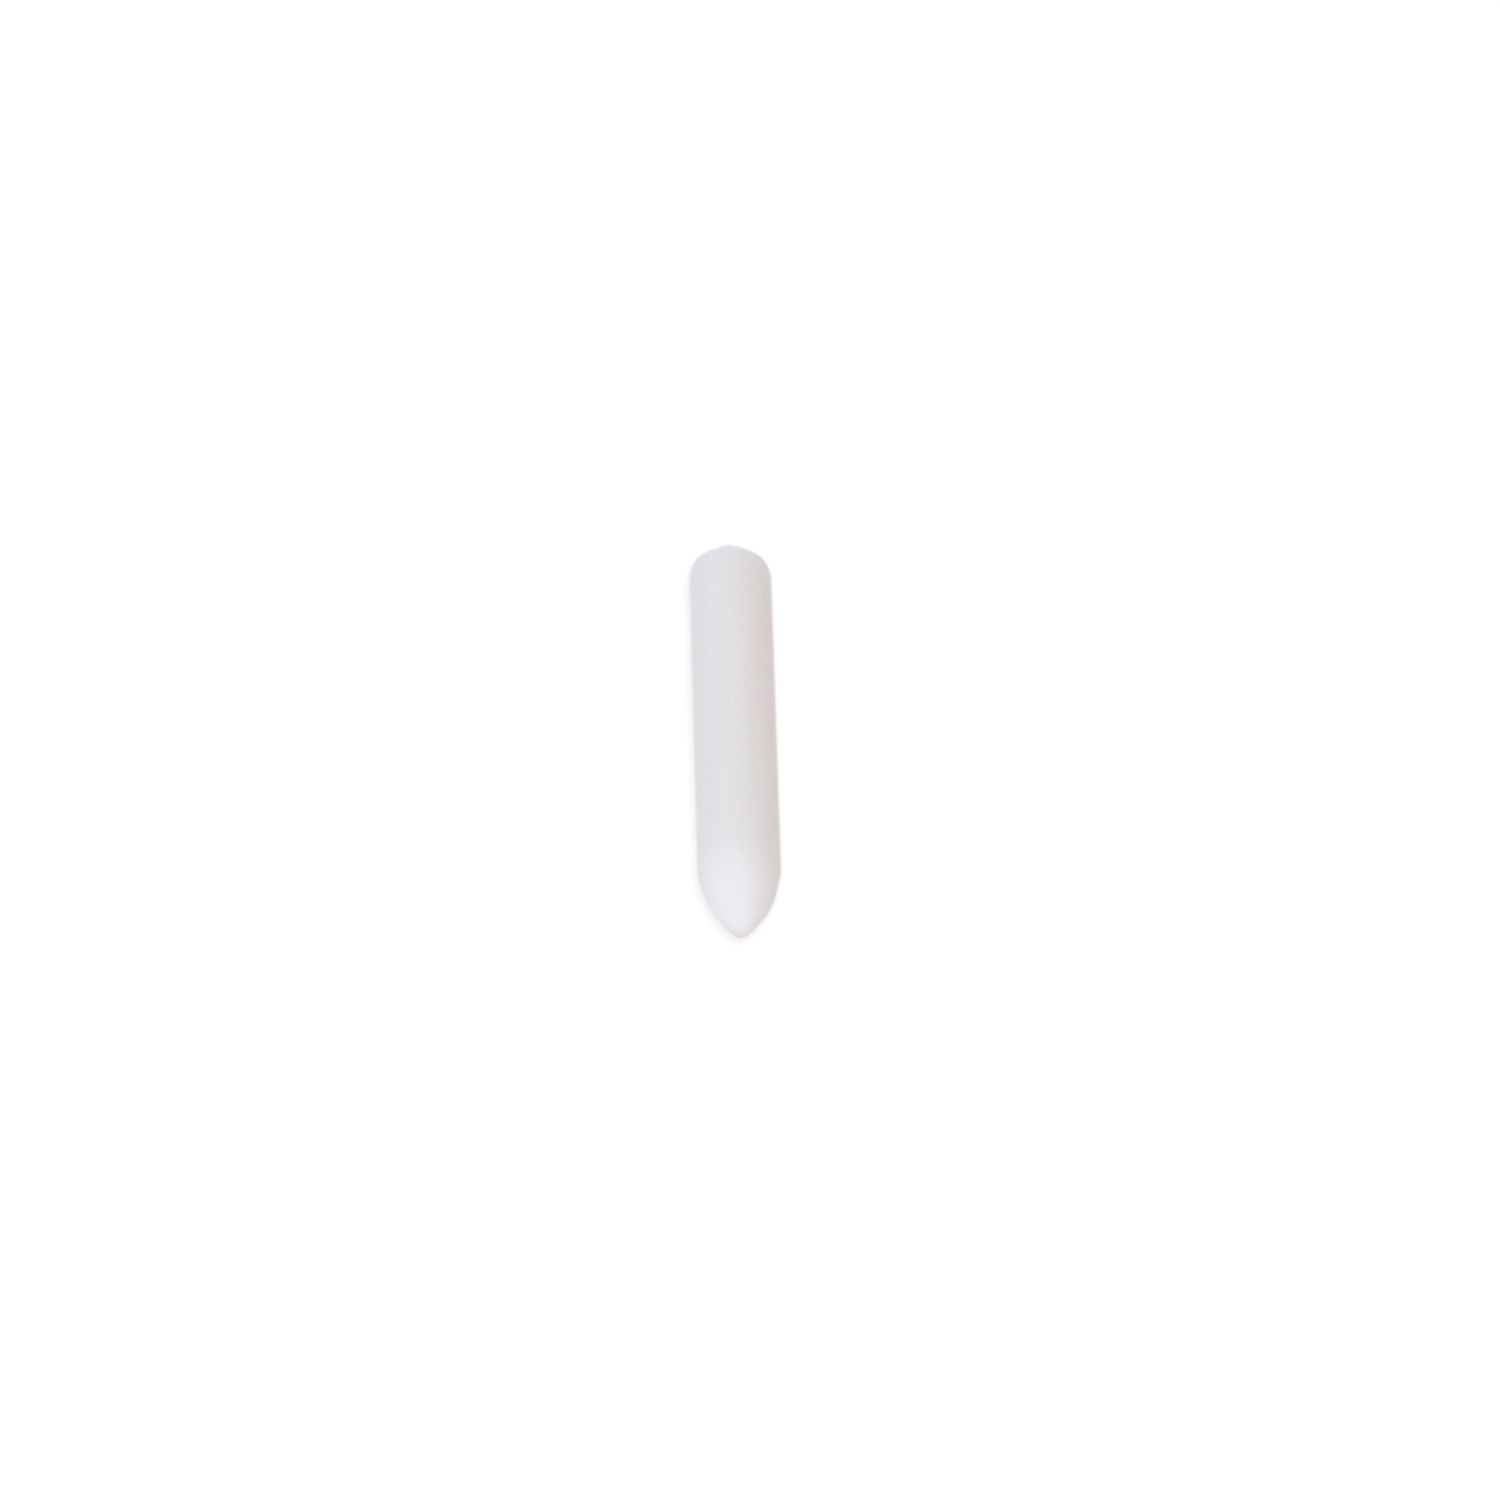 Felt white, round Ø 3.5 mm (25 pcs.)